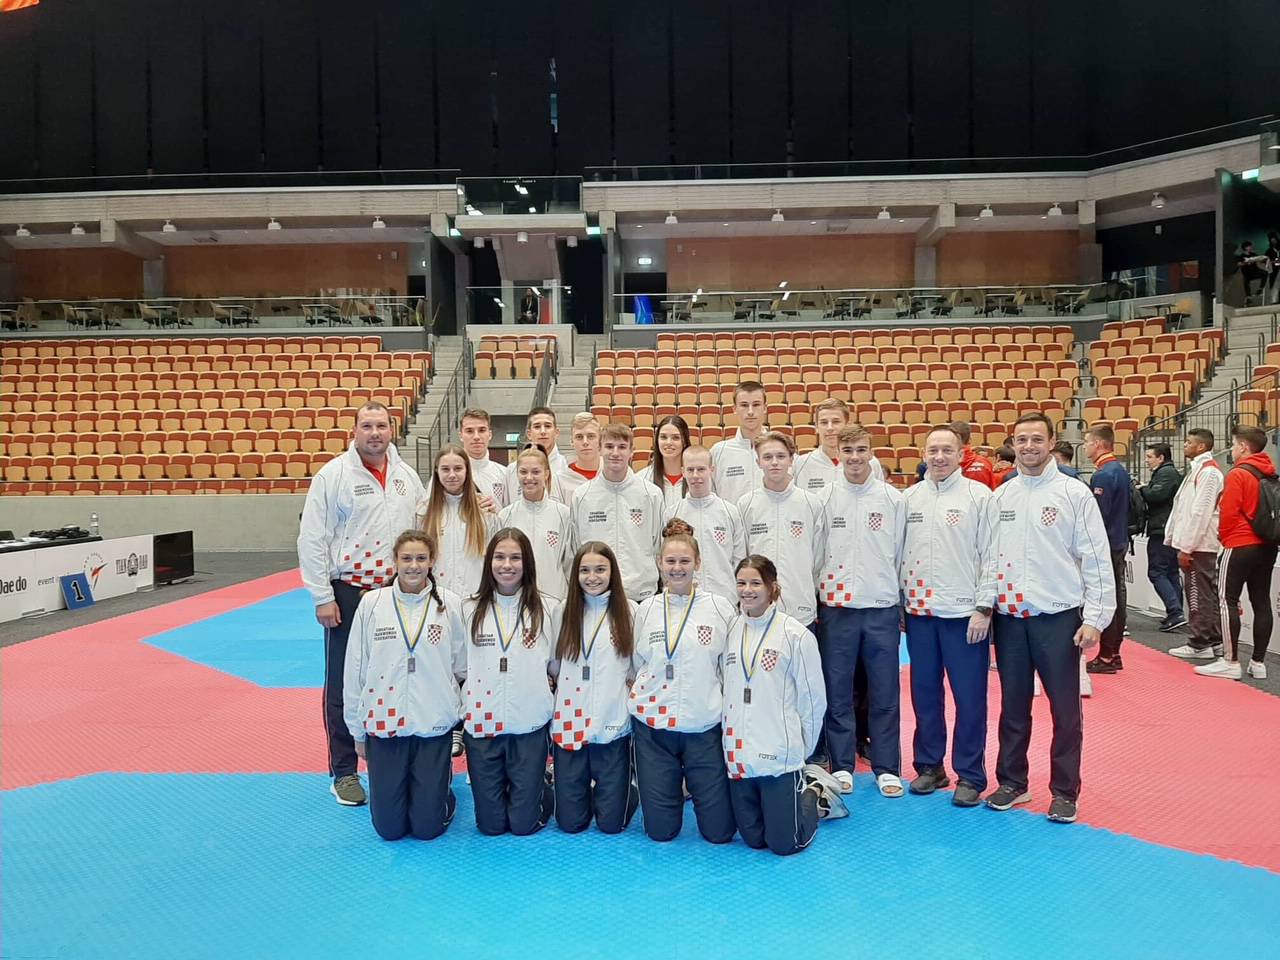 Hrvatska osvojila pet medalja na Europskom u taekwondou